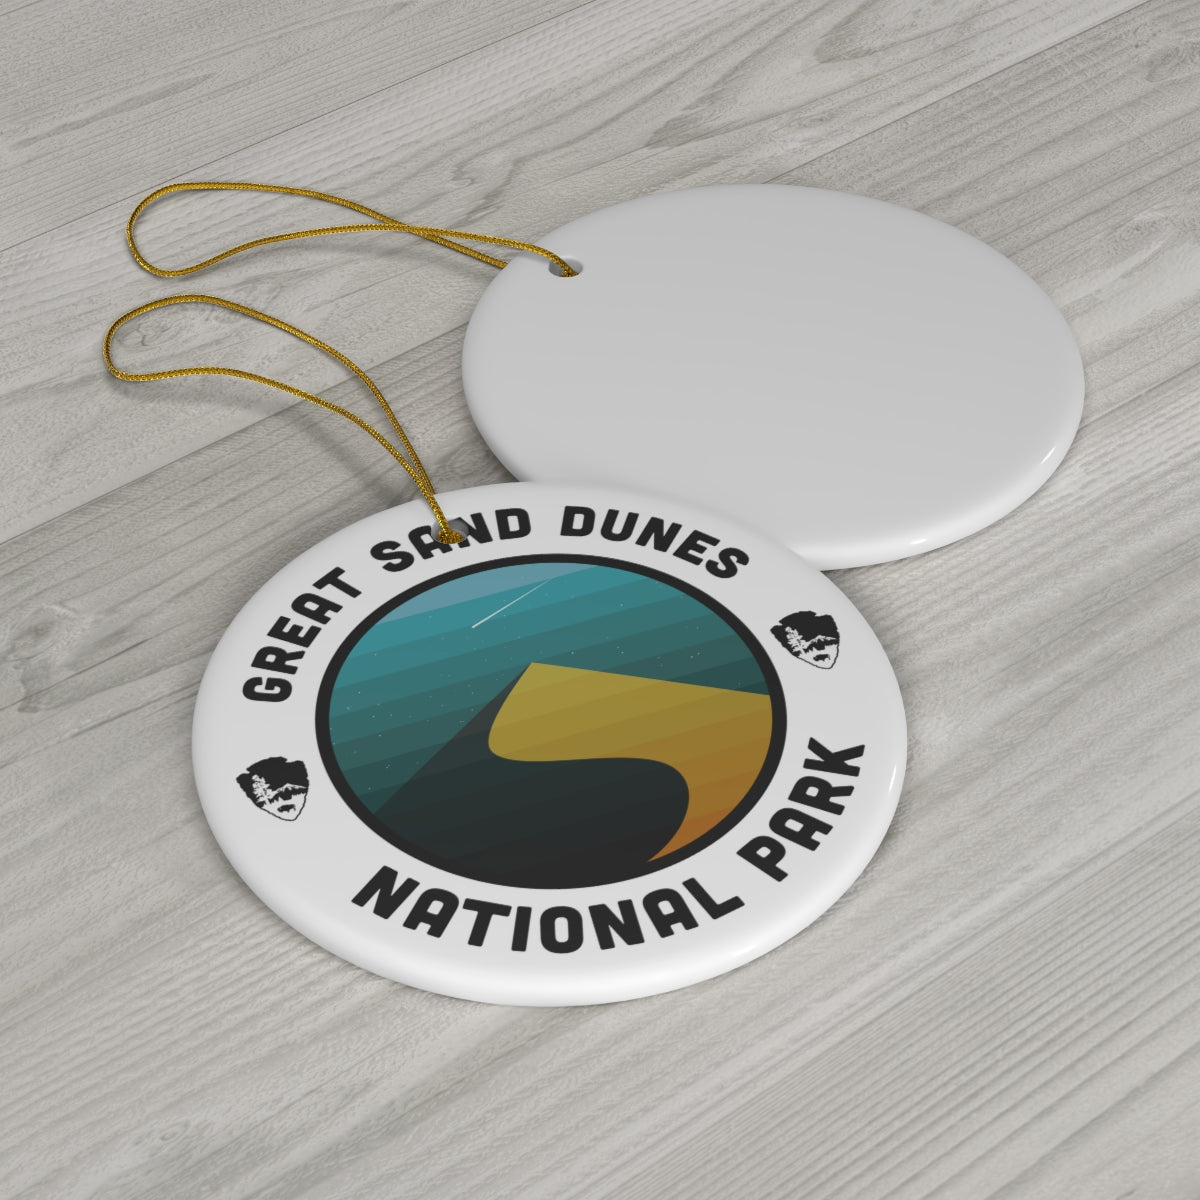 Great Sand Dunes National Park Ornament - Round Emblem Design